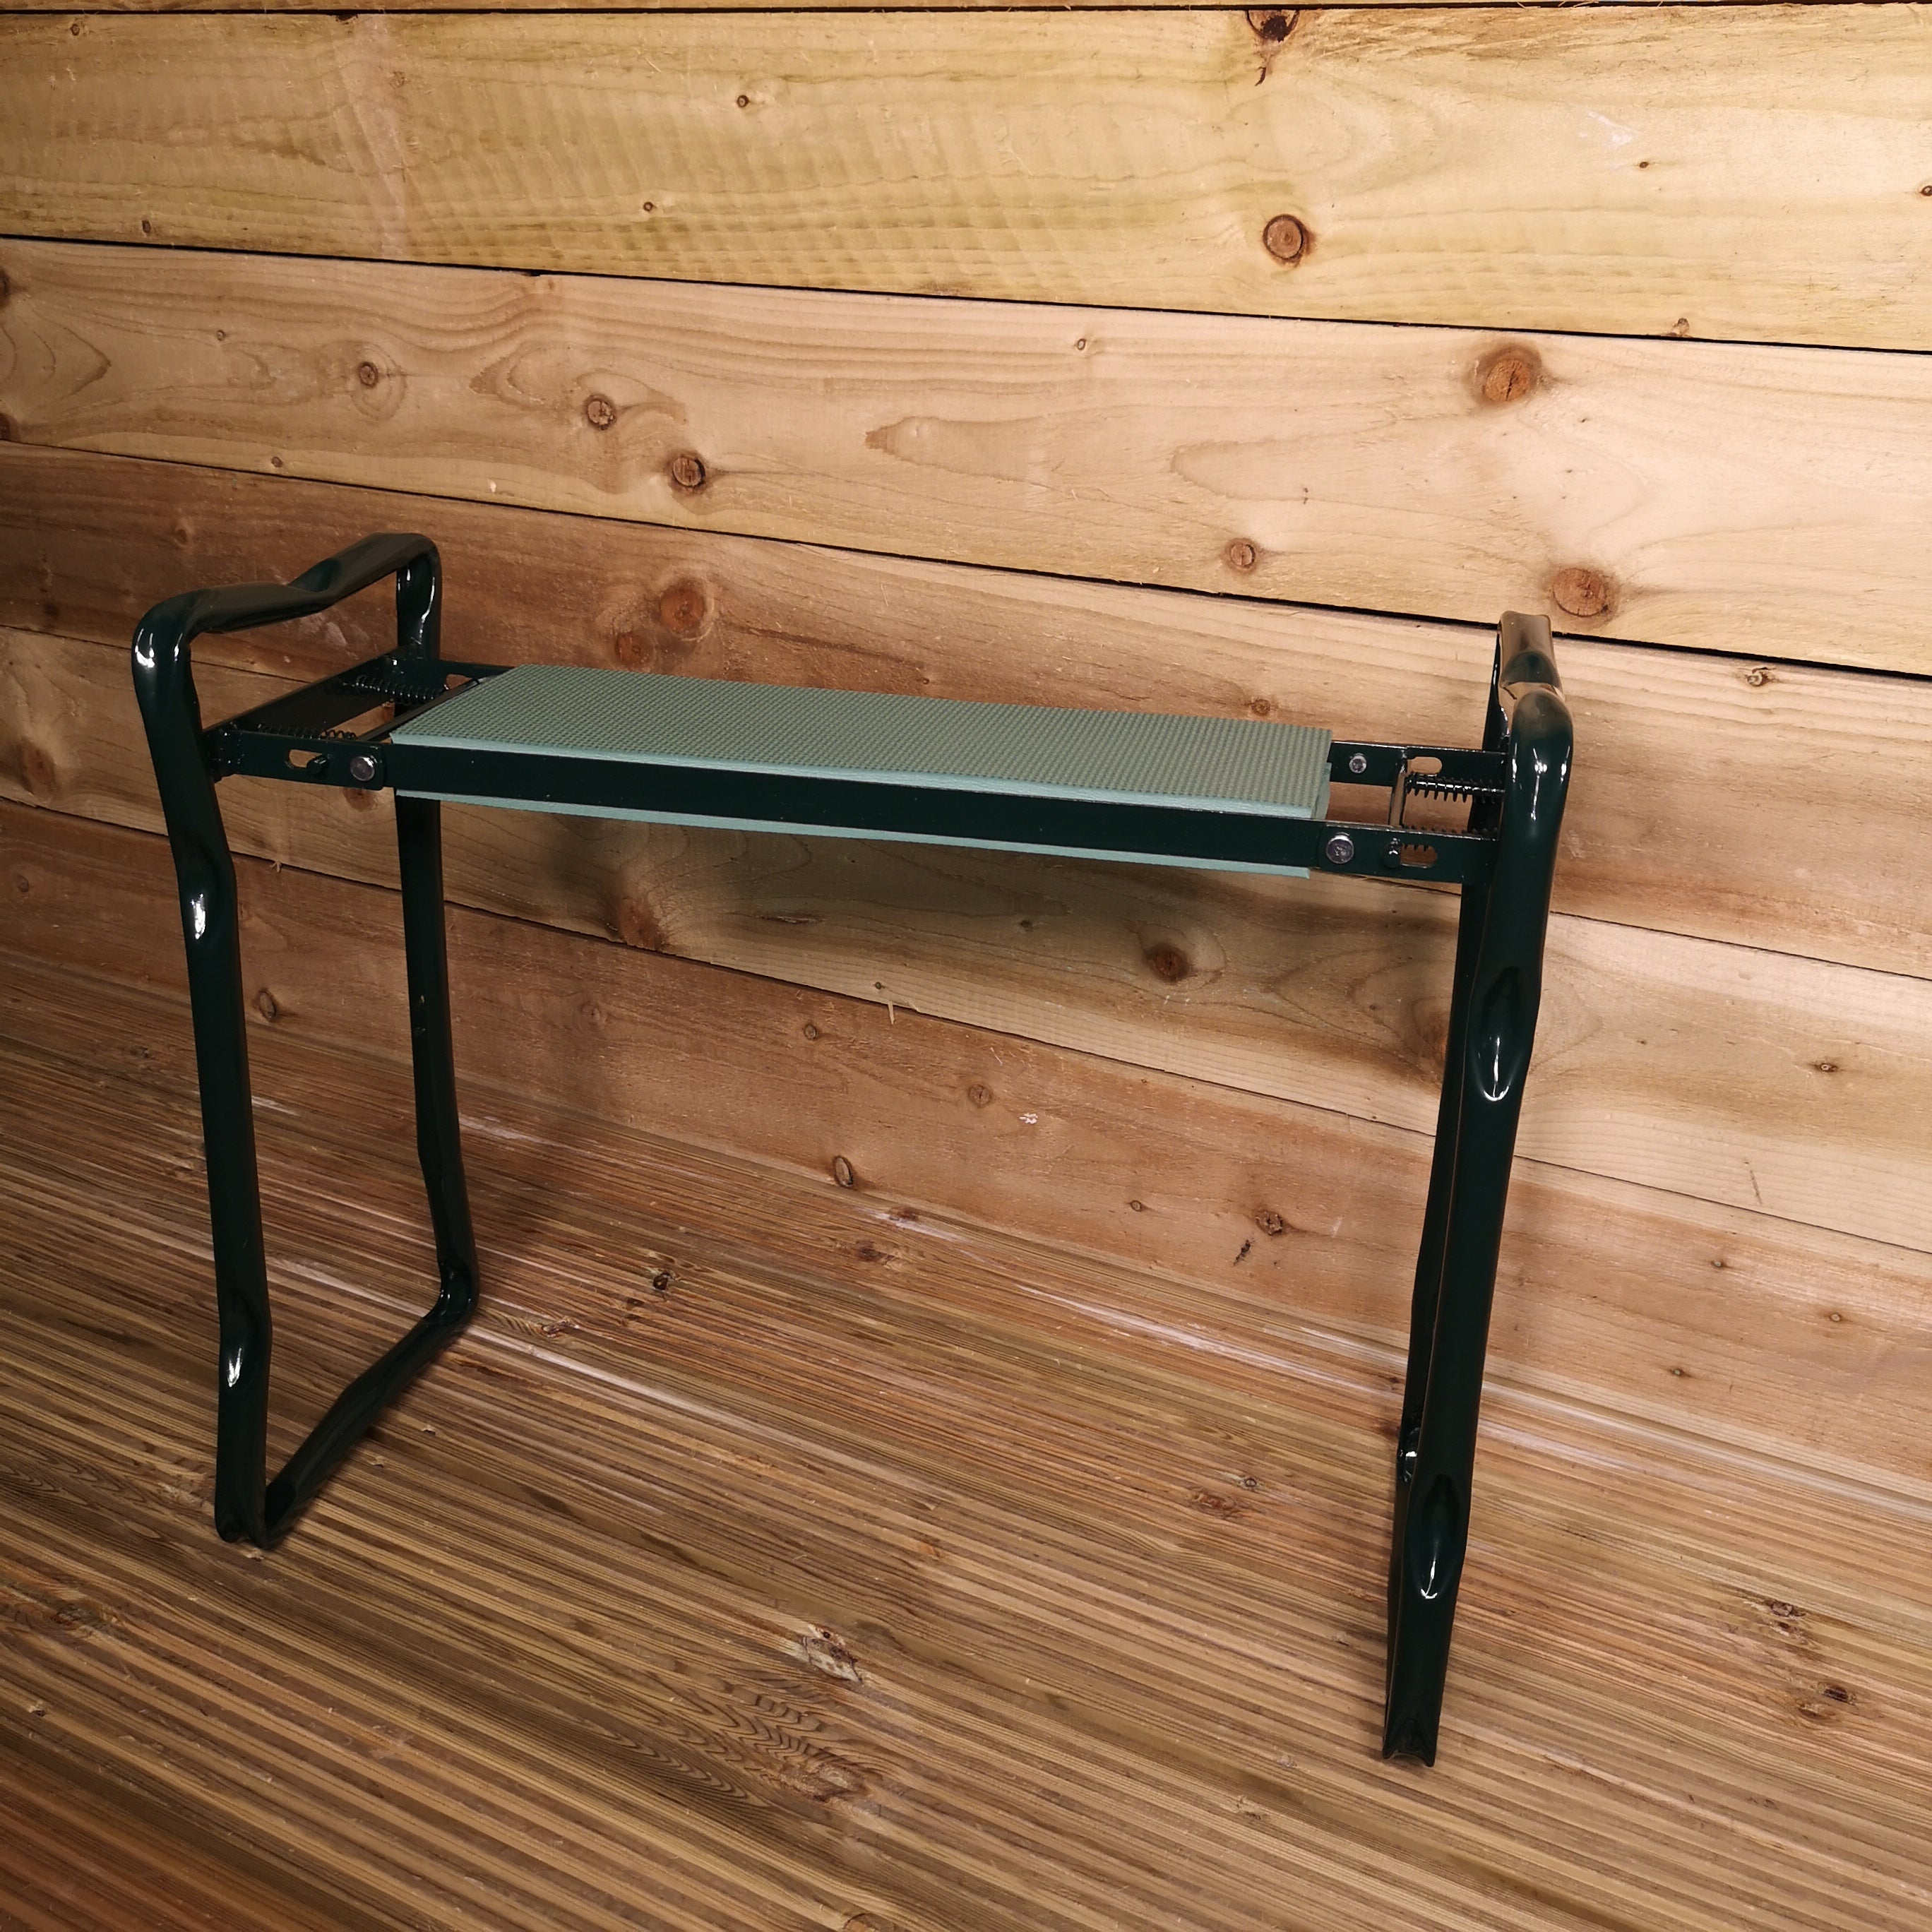 Robust Folding Garden / Gardening Kneeler & Seat